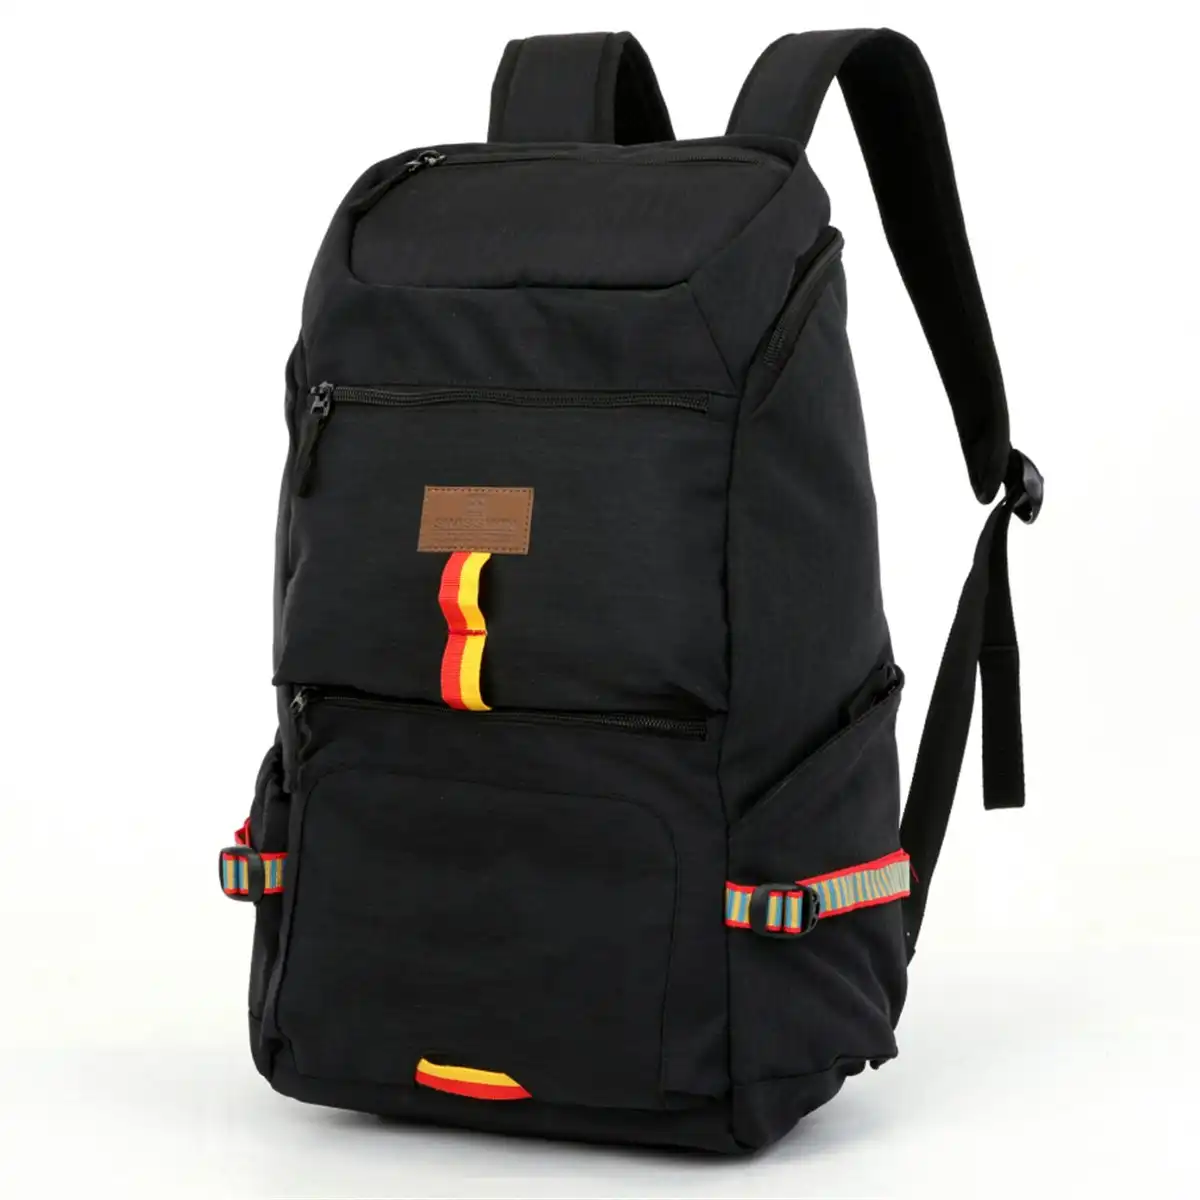 Swisswin Swiss Water-Resistant 15.6″ laptop Backpack School Travel Daily Shoulder Bag SW1802